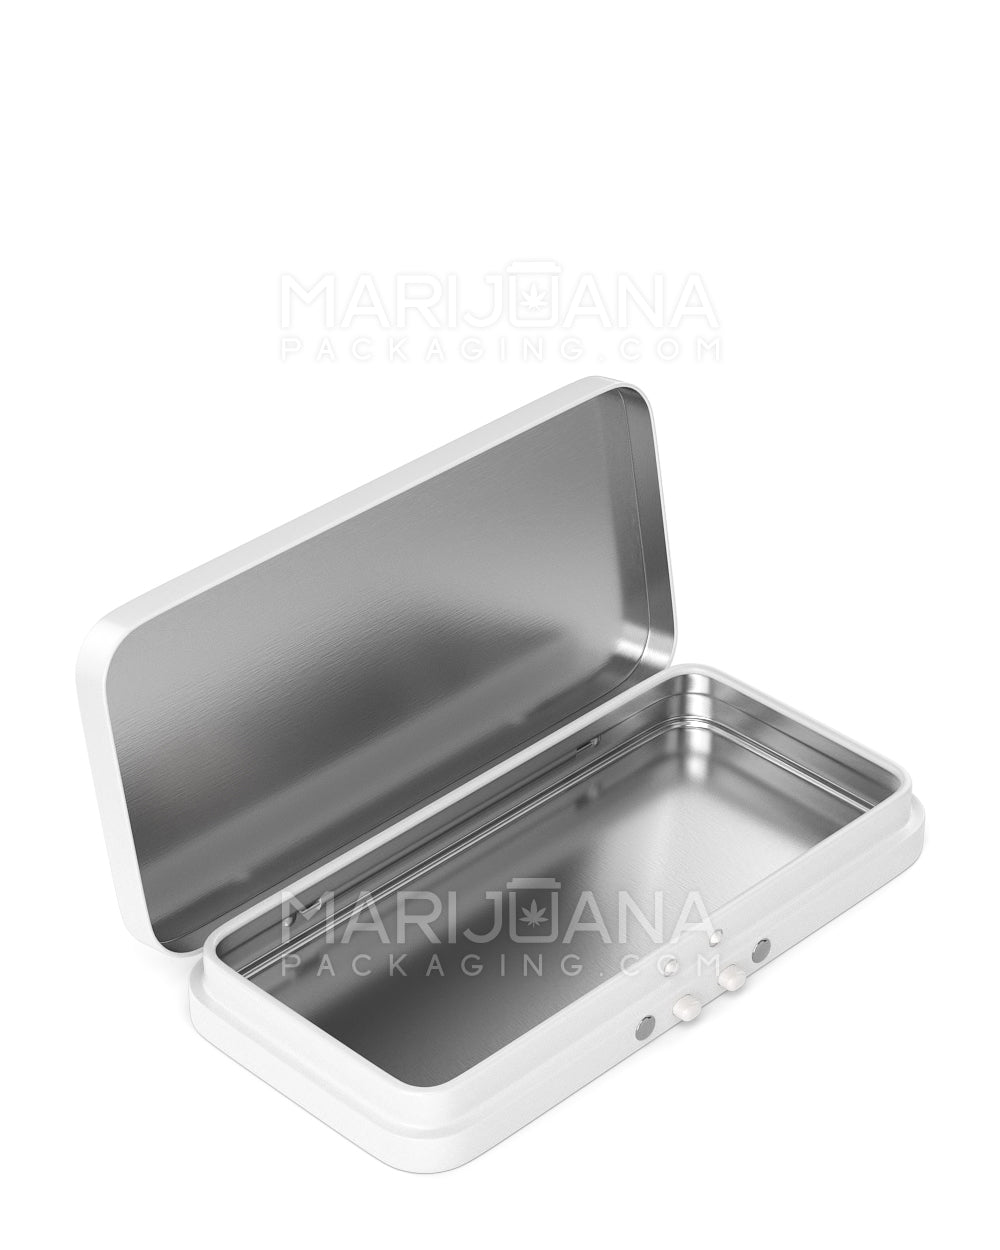 Child-resistant Tin Box For Cannabis Edible & Joint - Marijuana